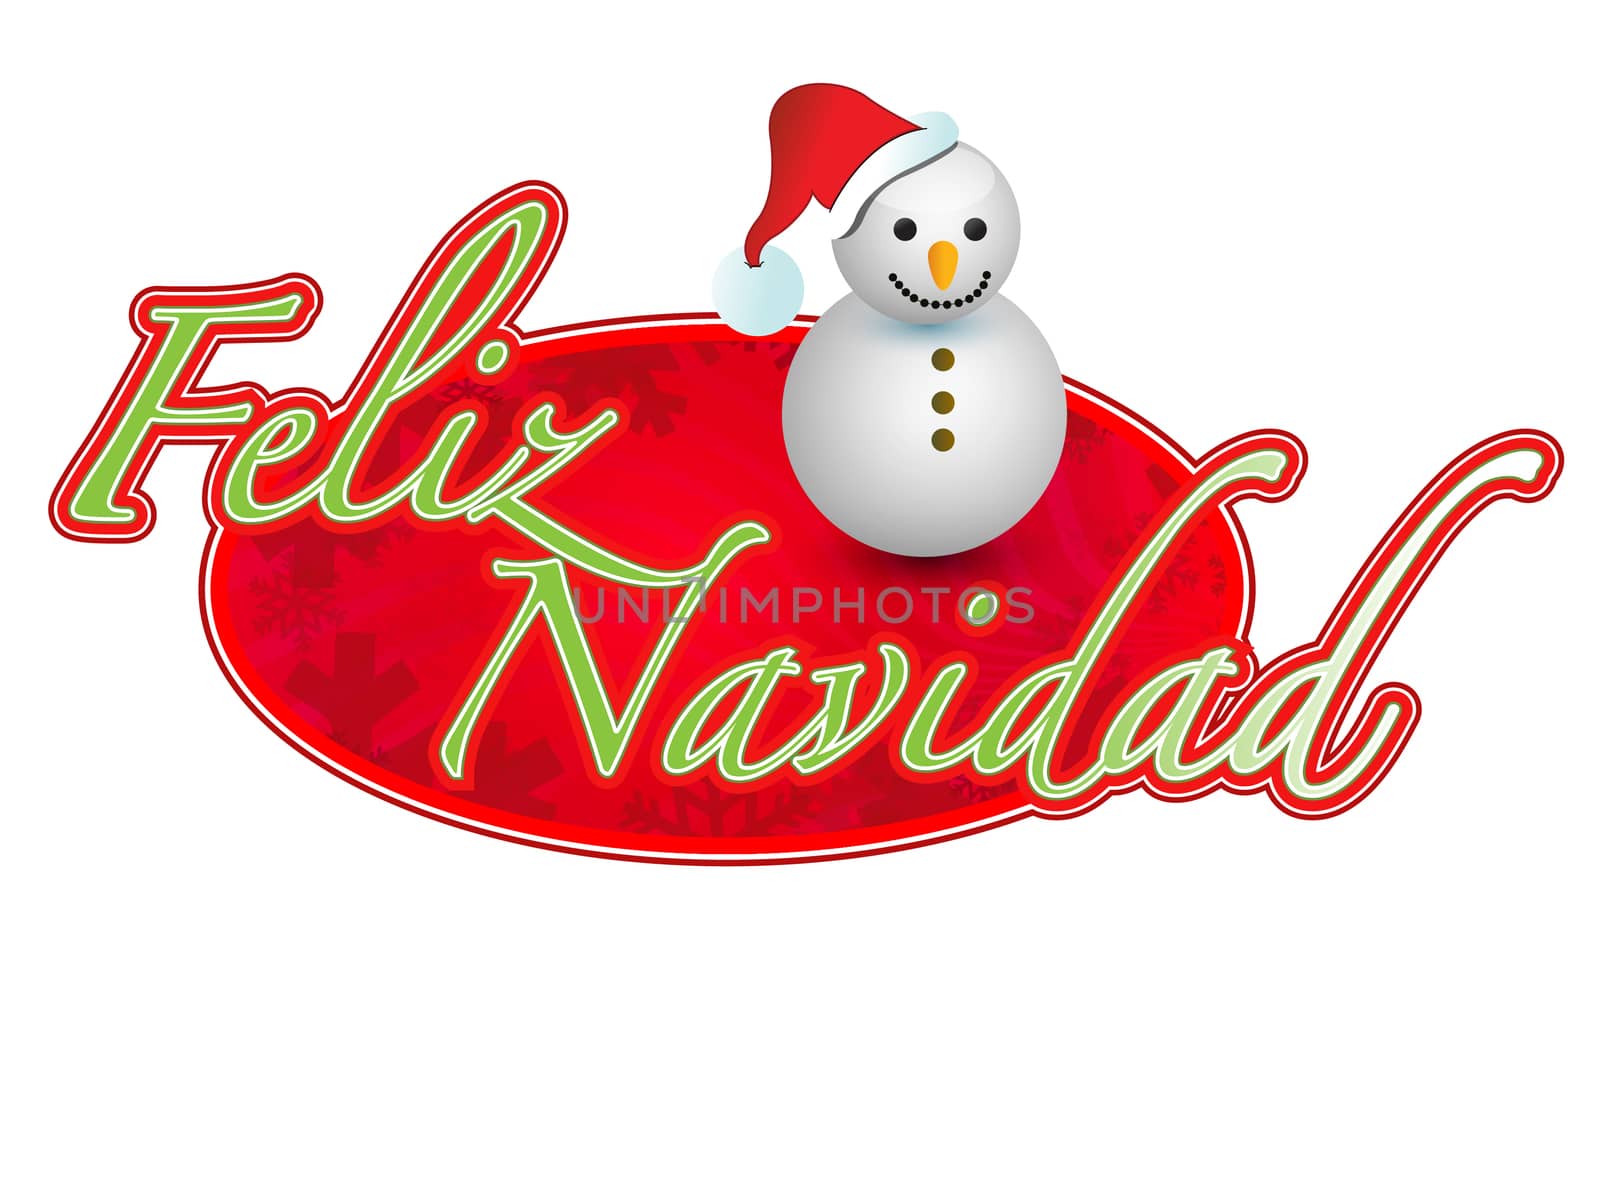 Spanish - merry christmas snowman sign illustration design